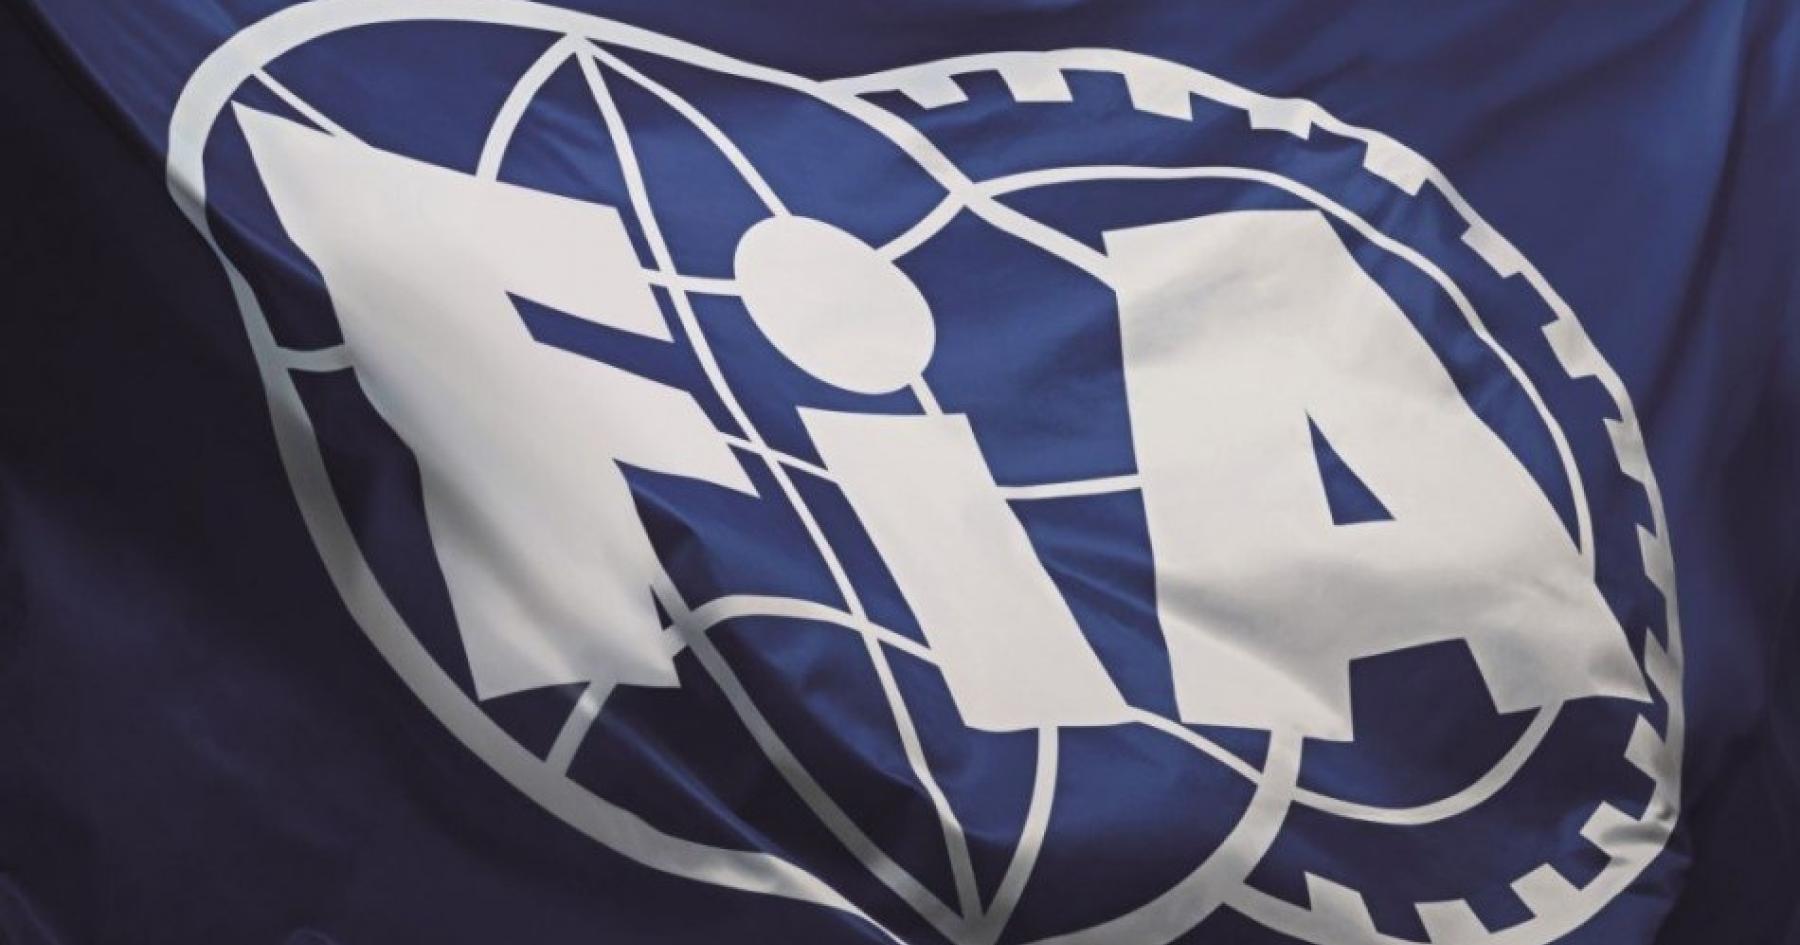 Revving Towards Success: FIA Secures Groundbreaking Partnership with AlphaTauri